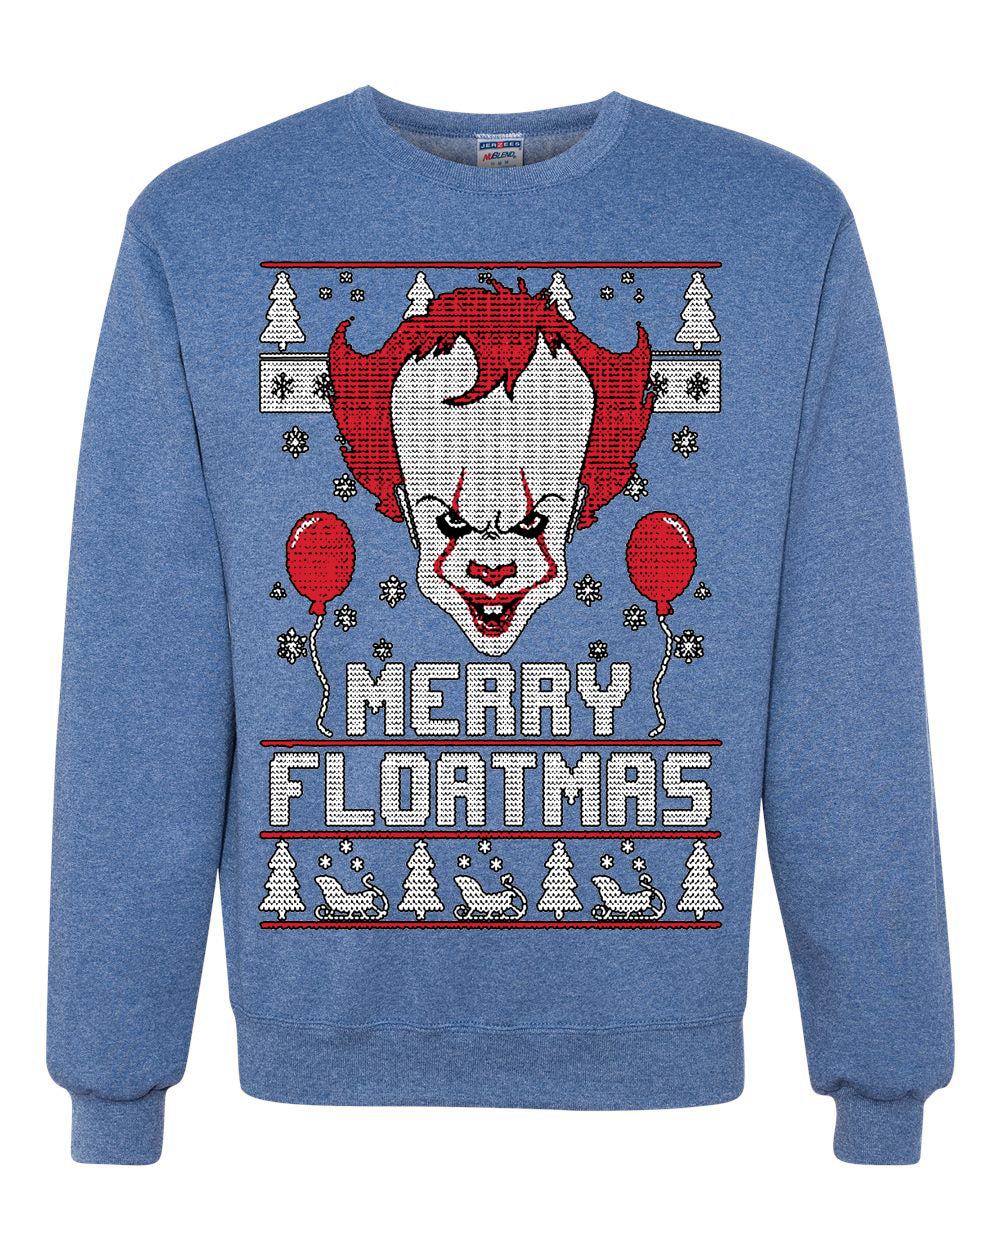 Merry Floatmas IT Clown Merry Ugly Christmas Sweater Unisex Crewneck Graphic Sweatshirt